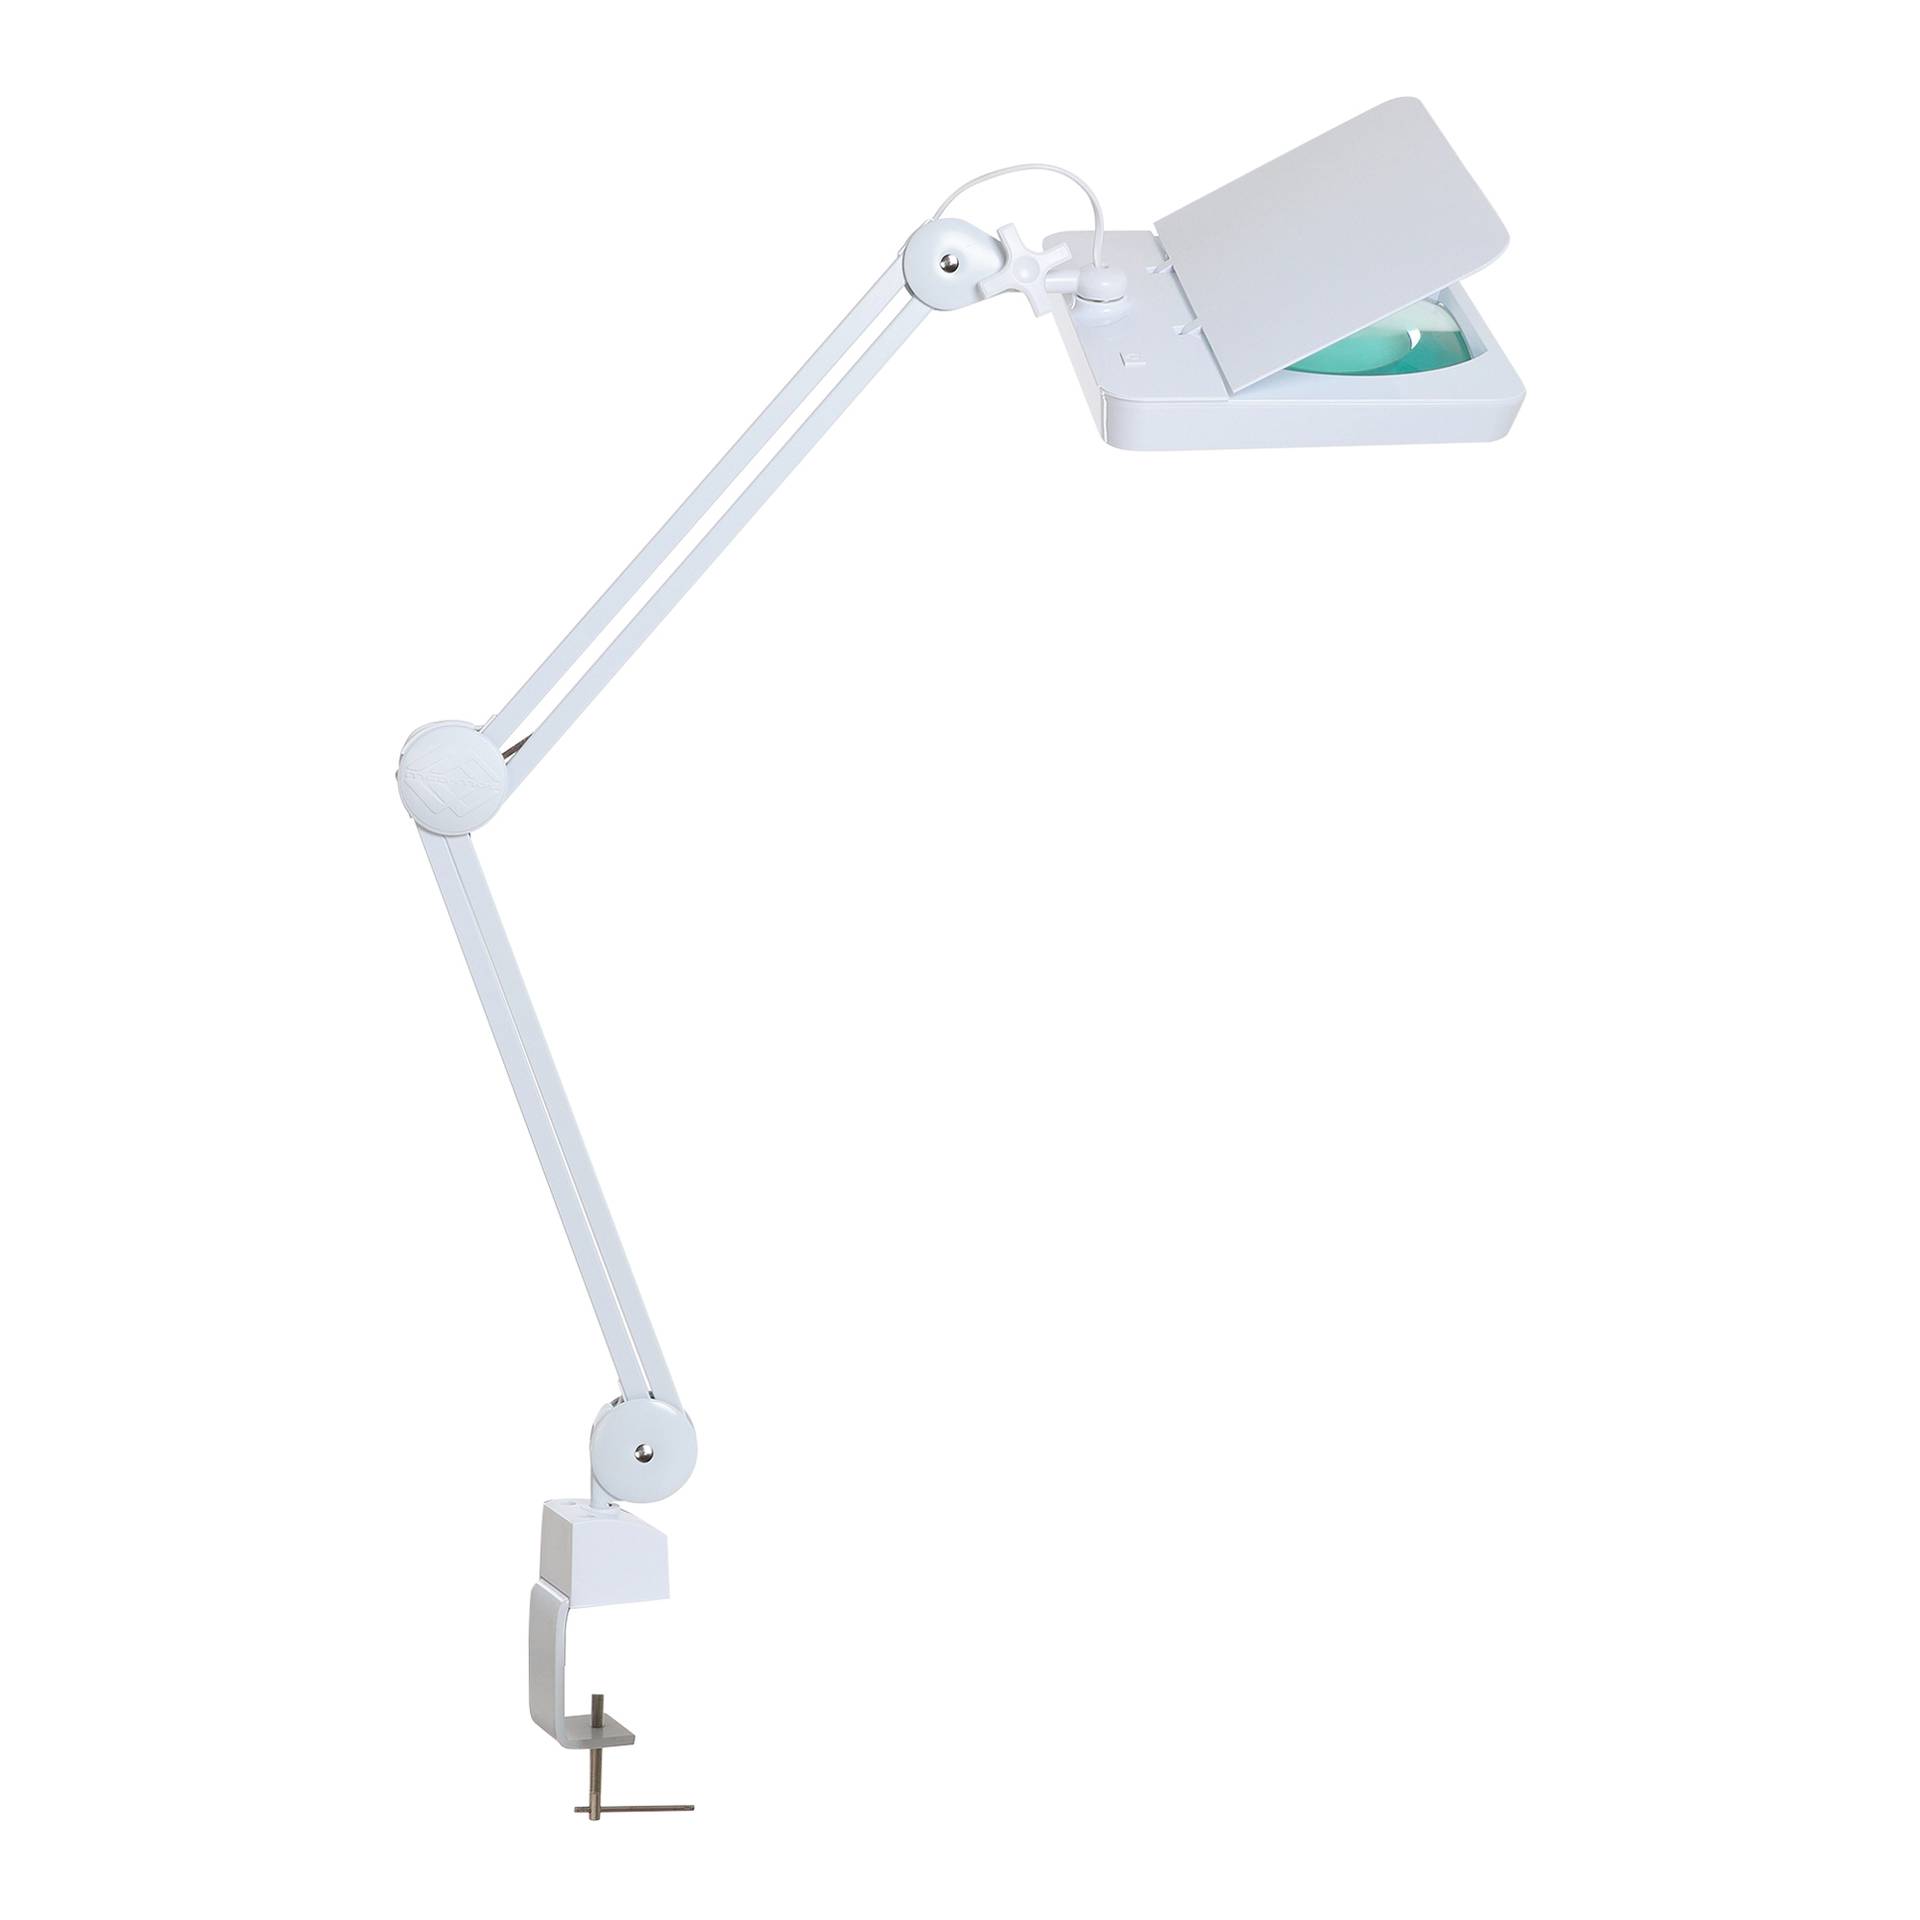 Лампа бестеневая с РУ (лампа-лупа) Med-Mos 9002LED-FS (9008LED-D-189-Ш4), П-образная, на 84 светодиода - 3 